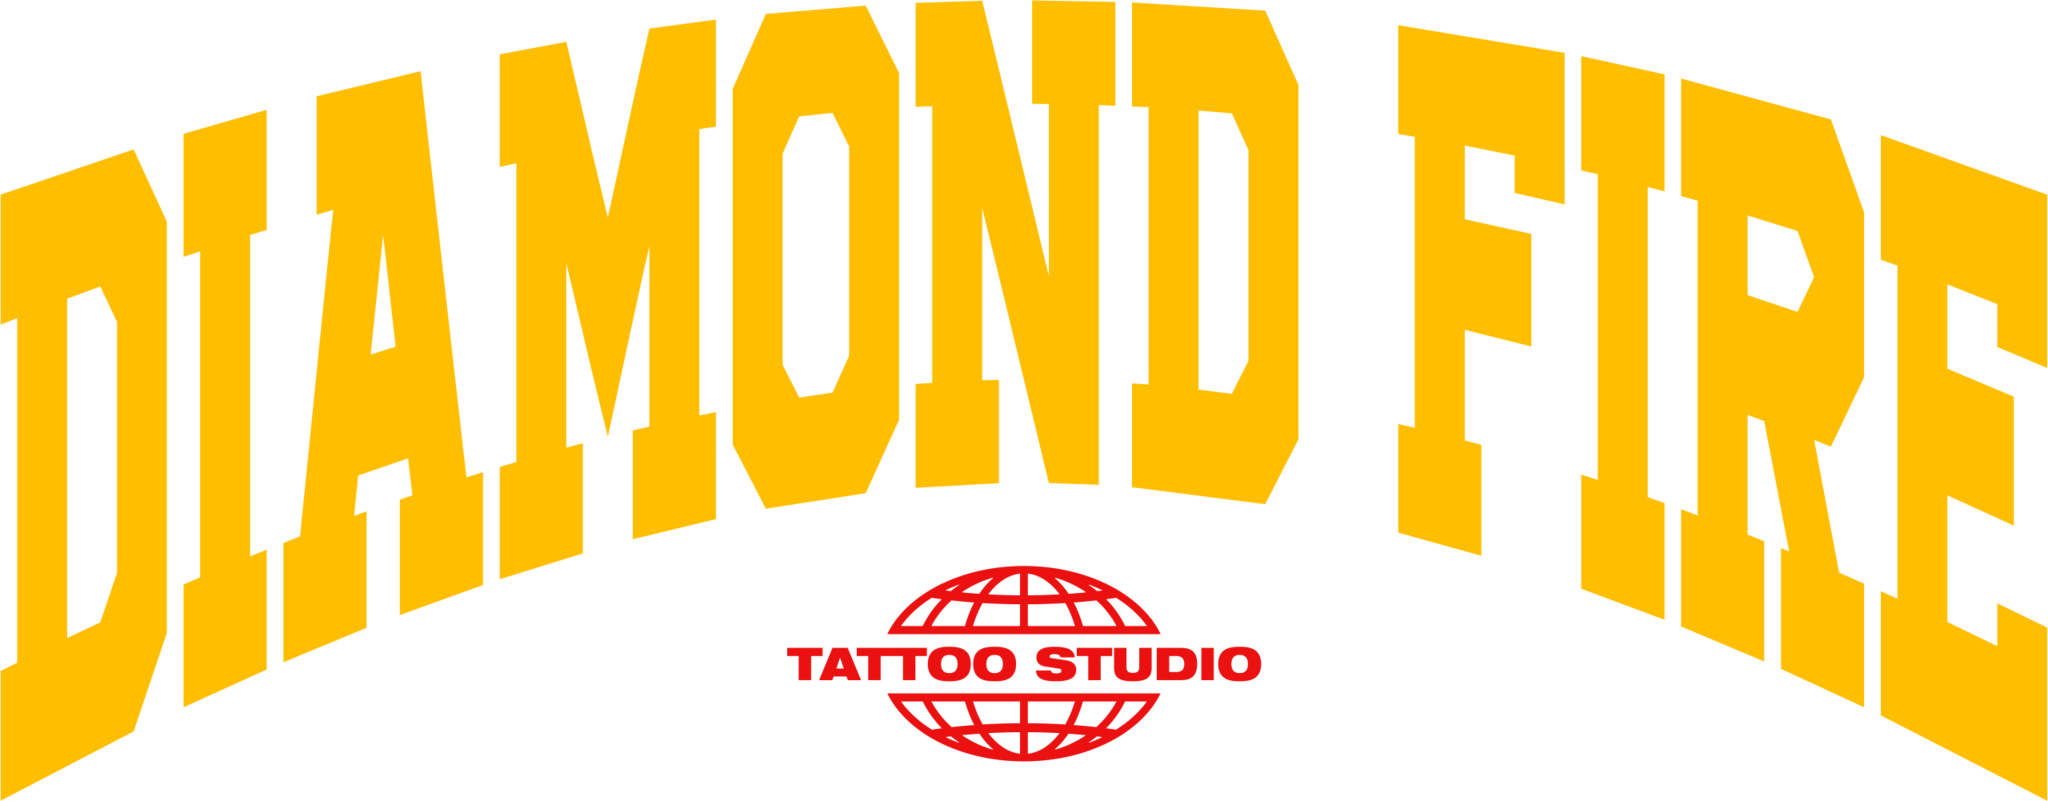 Studio One Tattoo - Norwood, PA 19074